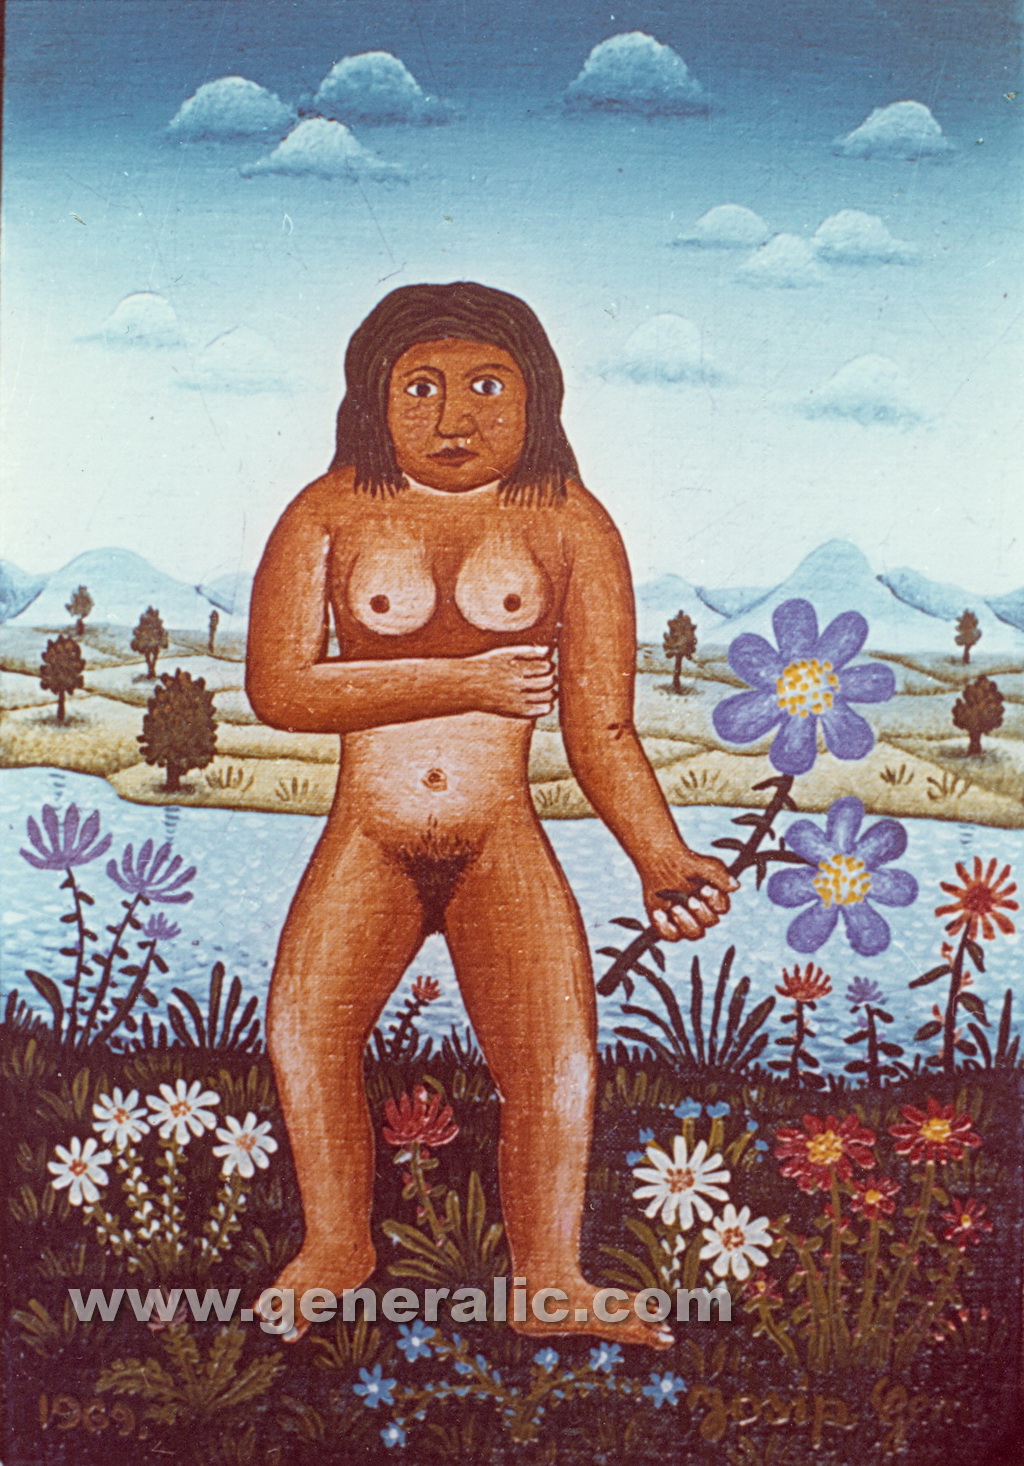 Josip Generalic, 1969, Nudist, oil on canvas